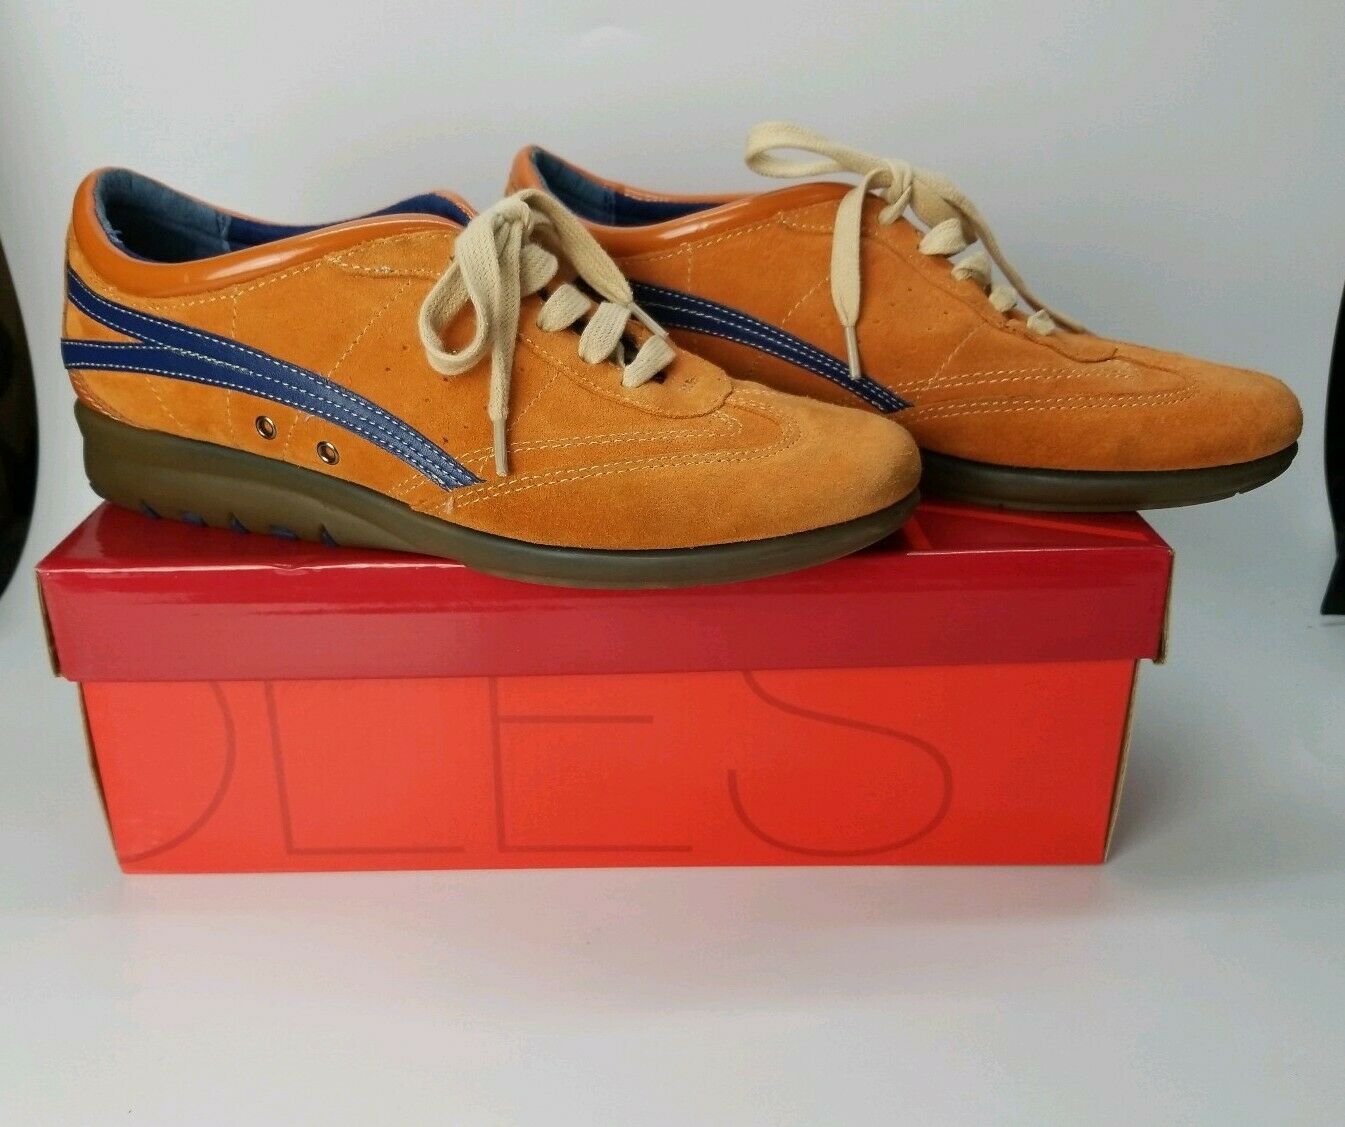 Retro Style Aerosoles 8 M Aircushion Orange Combo 464 Barely Worn Tennis Shoes